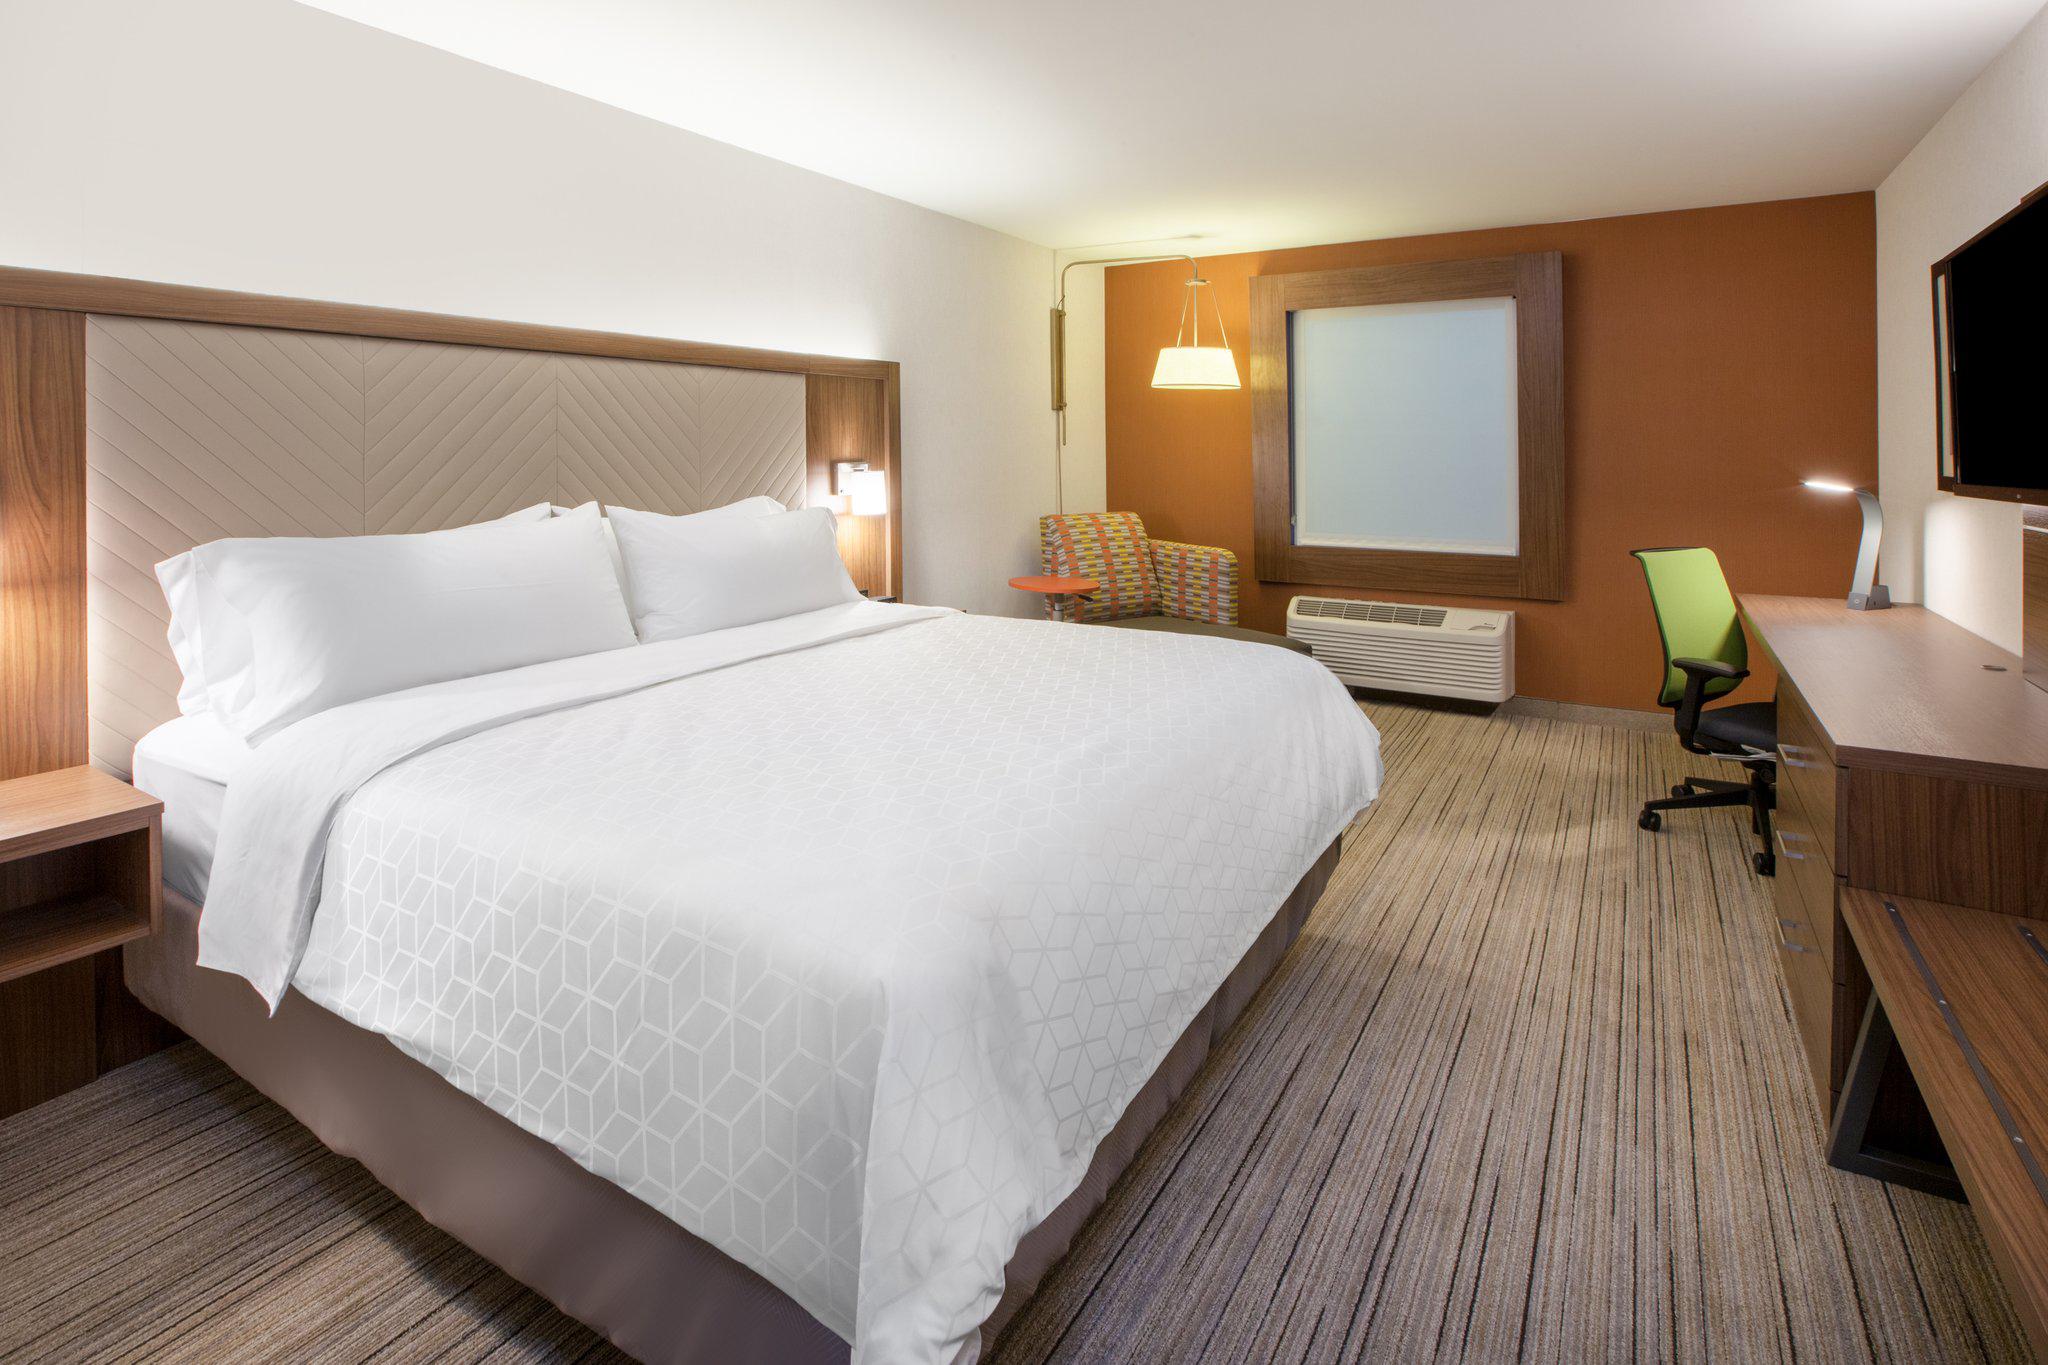 Holiday Inn Express & Suites Milwaukee - Brookfield Photo